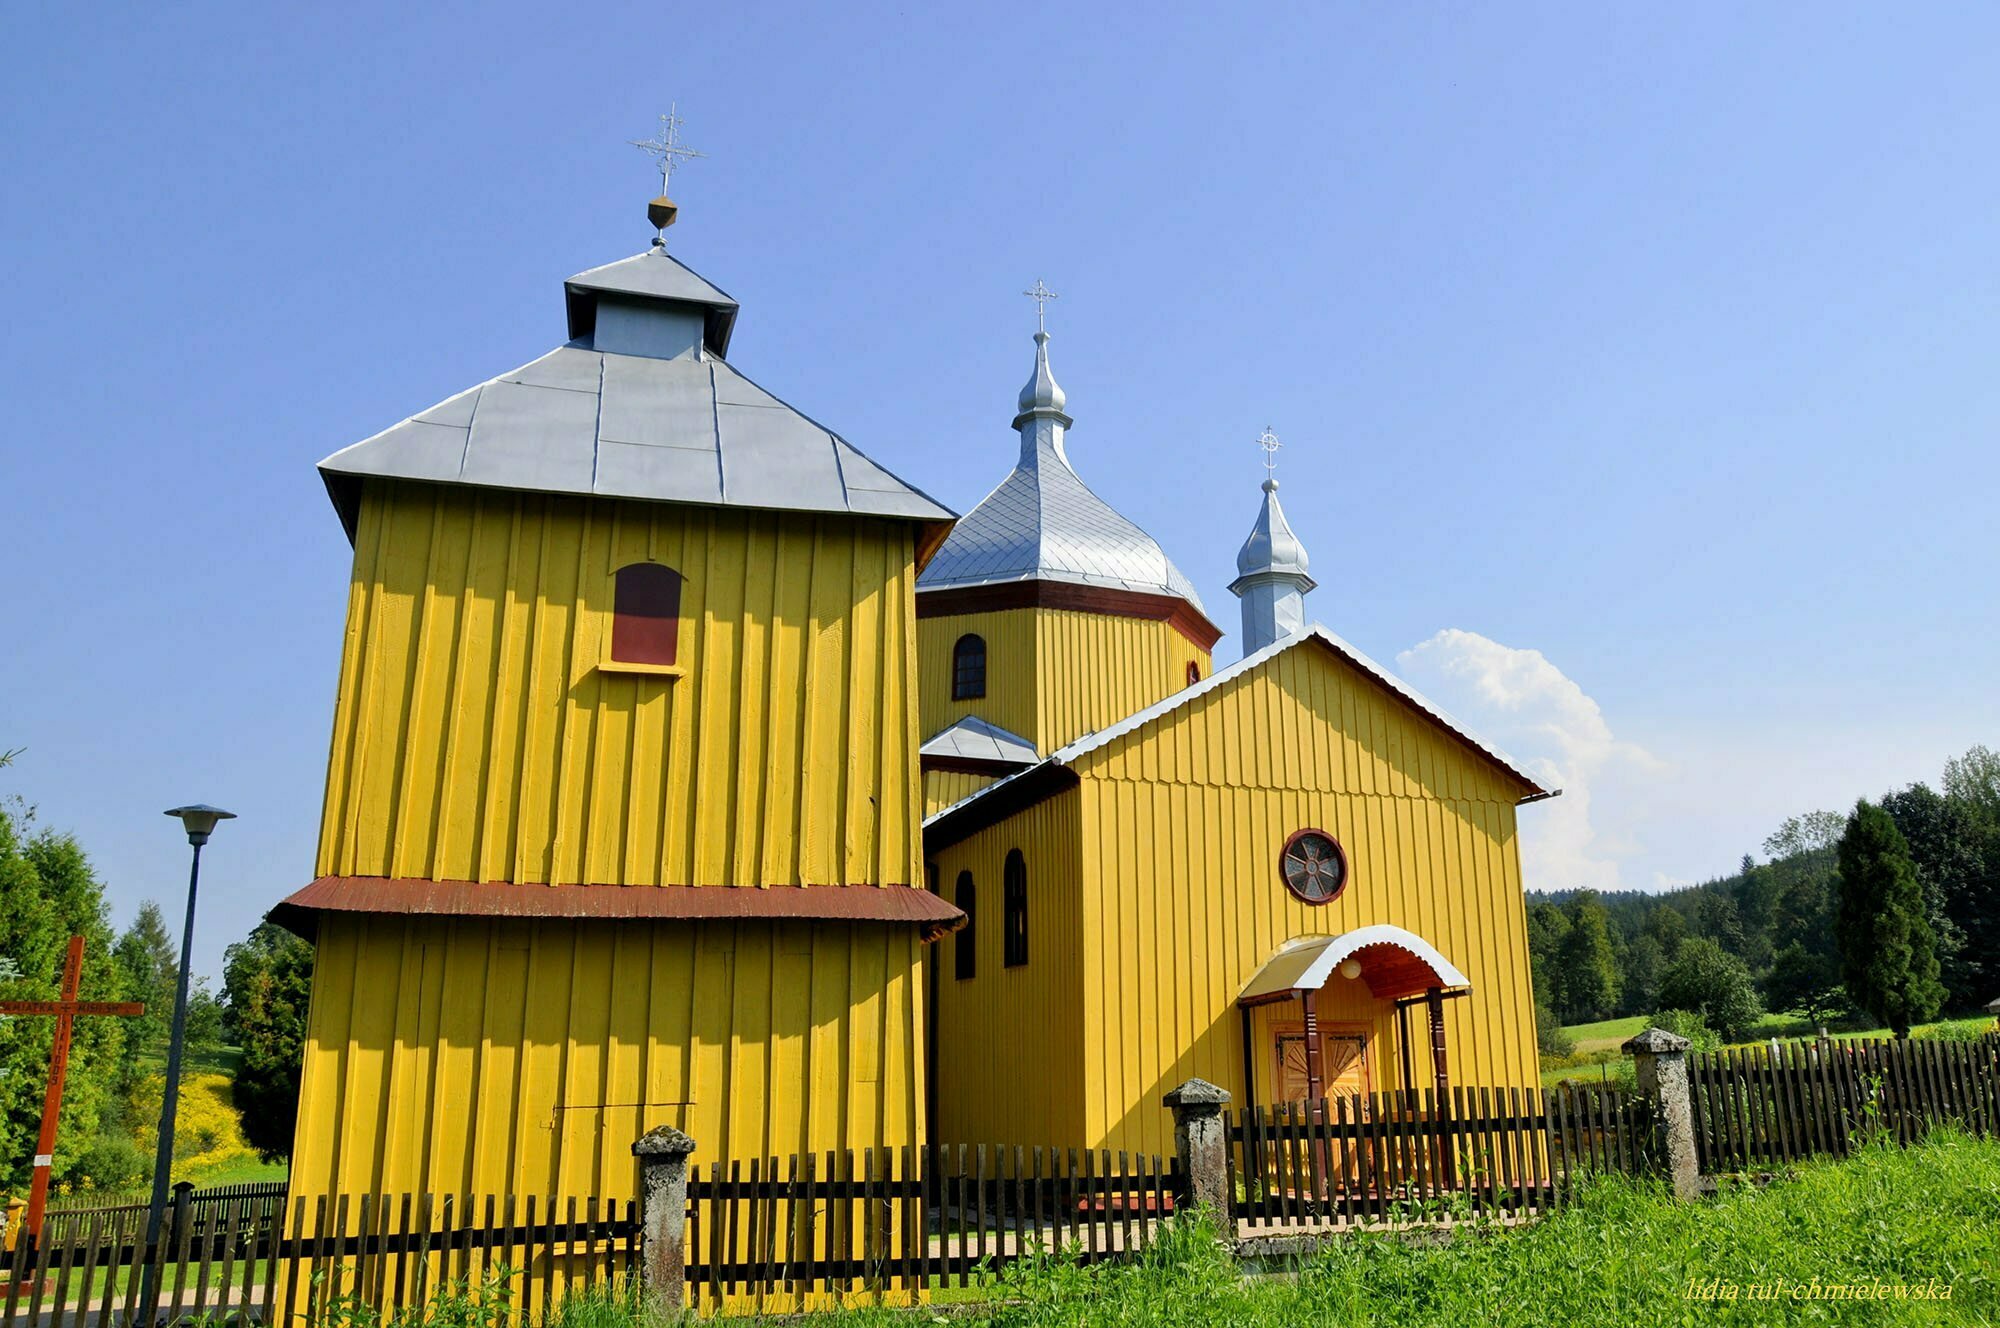 Cerkiew Leszczowate / fot. Lidia Tul-Chmielewska